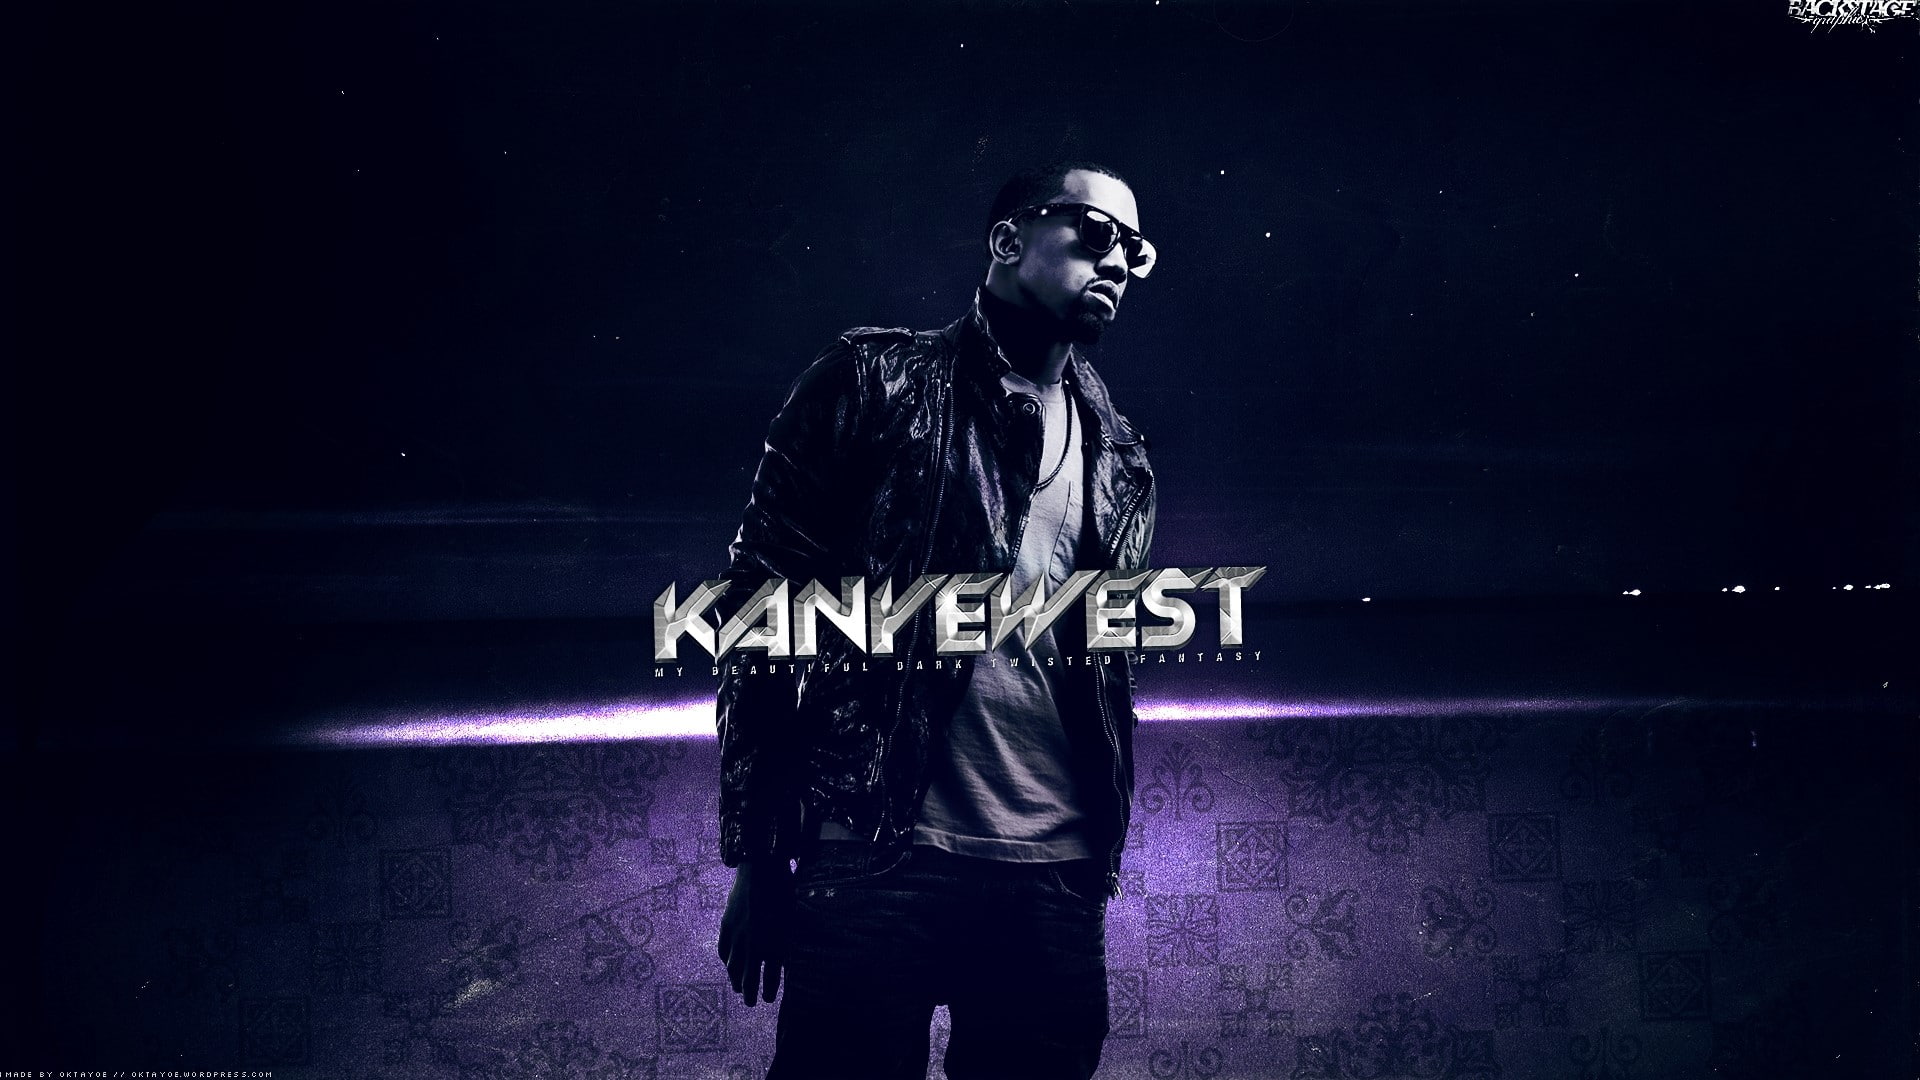 Kanye west, Jacket, Glasses, Look, Space, three quarter length